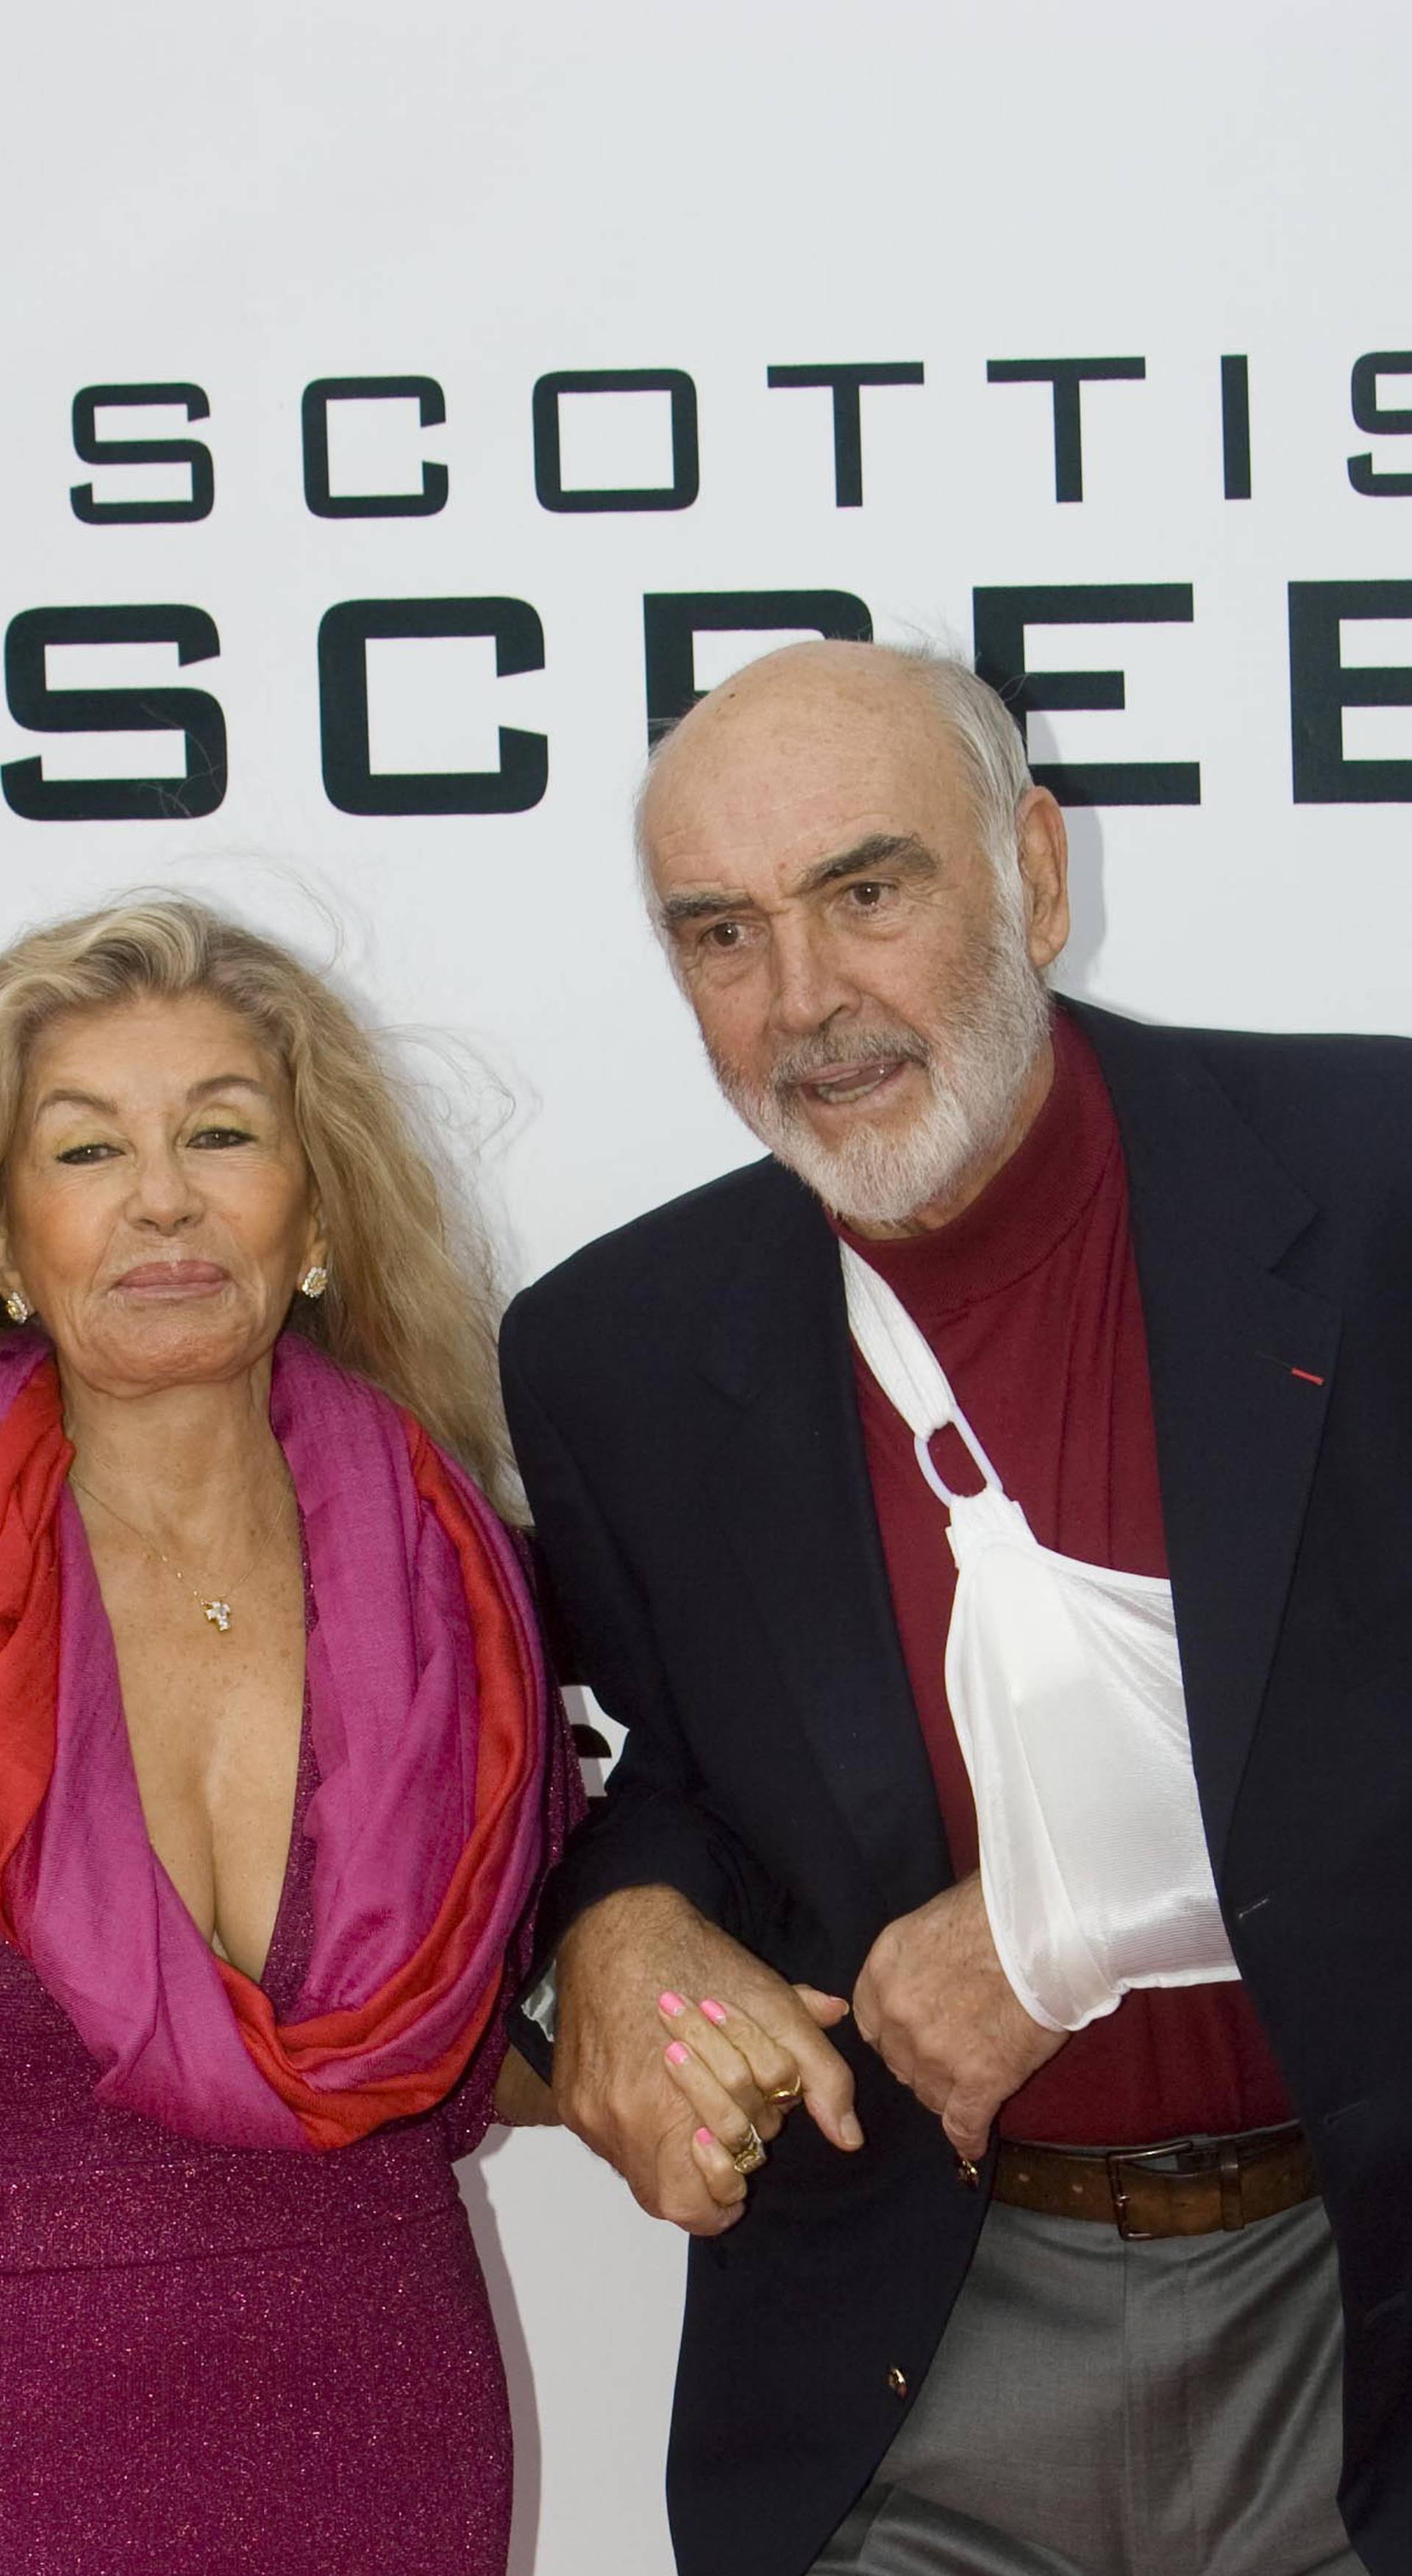 Glumac Sean Connery preminuo u 90. godini života